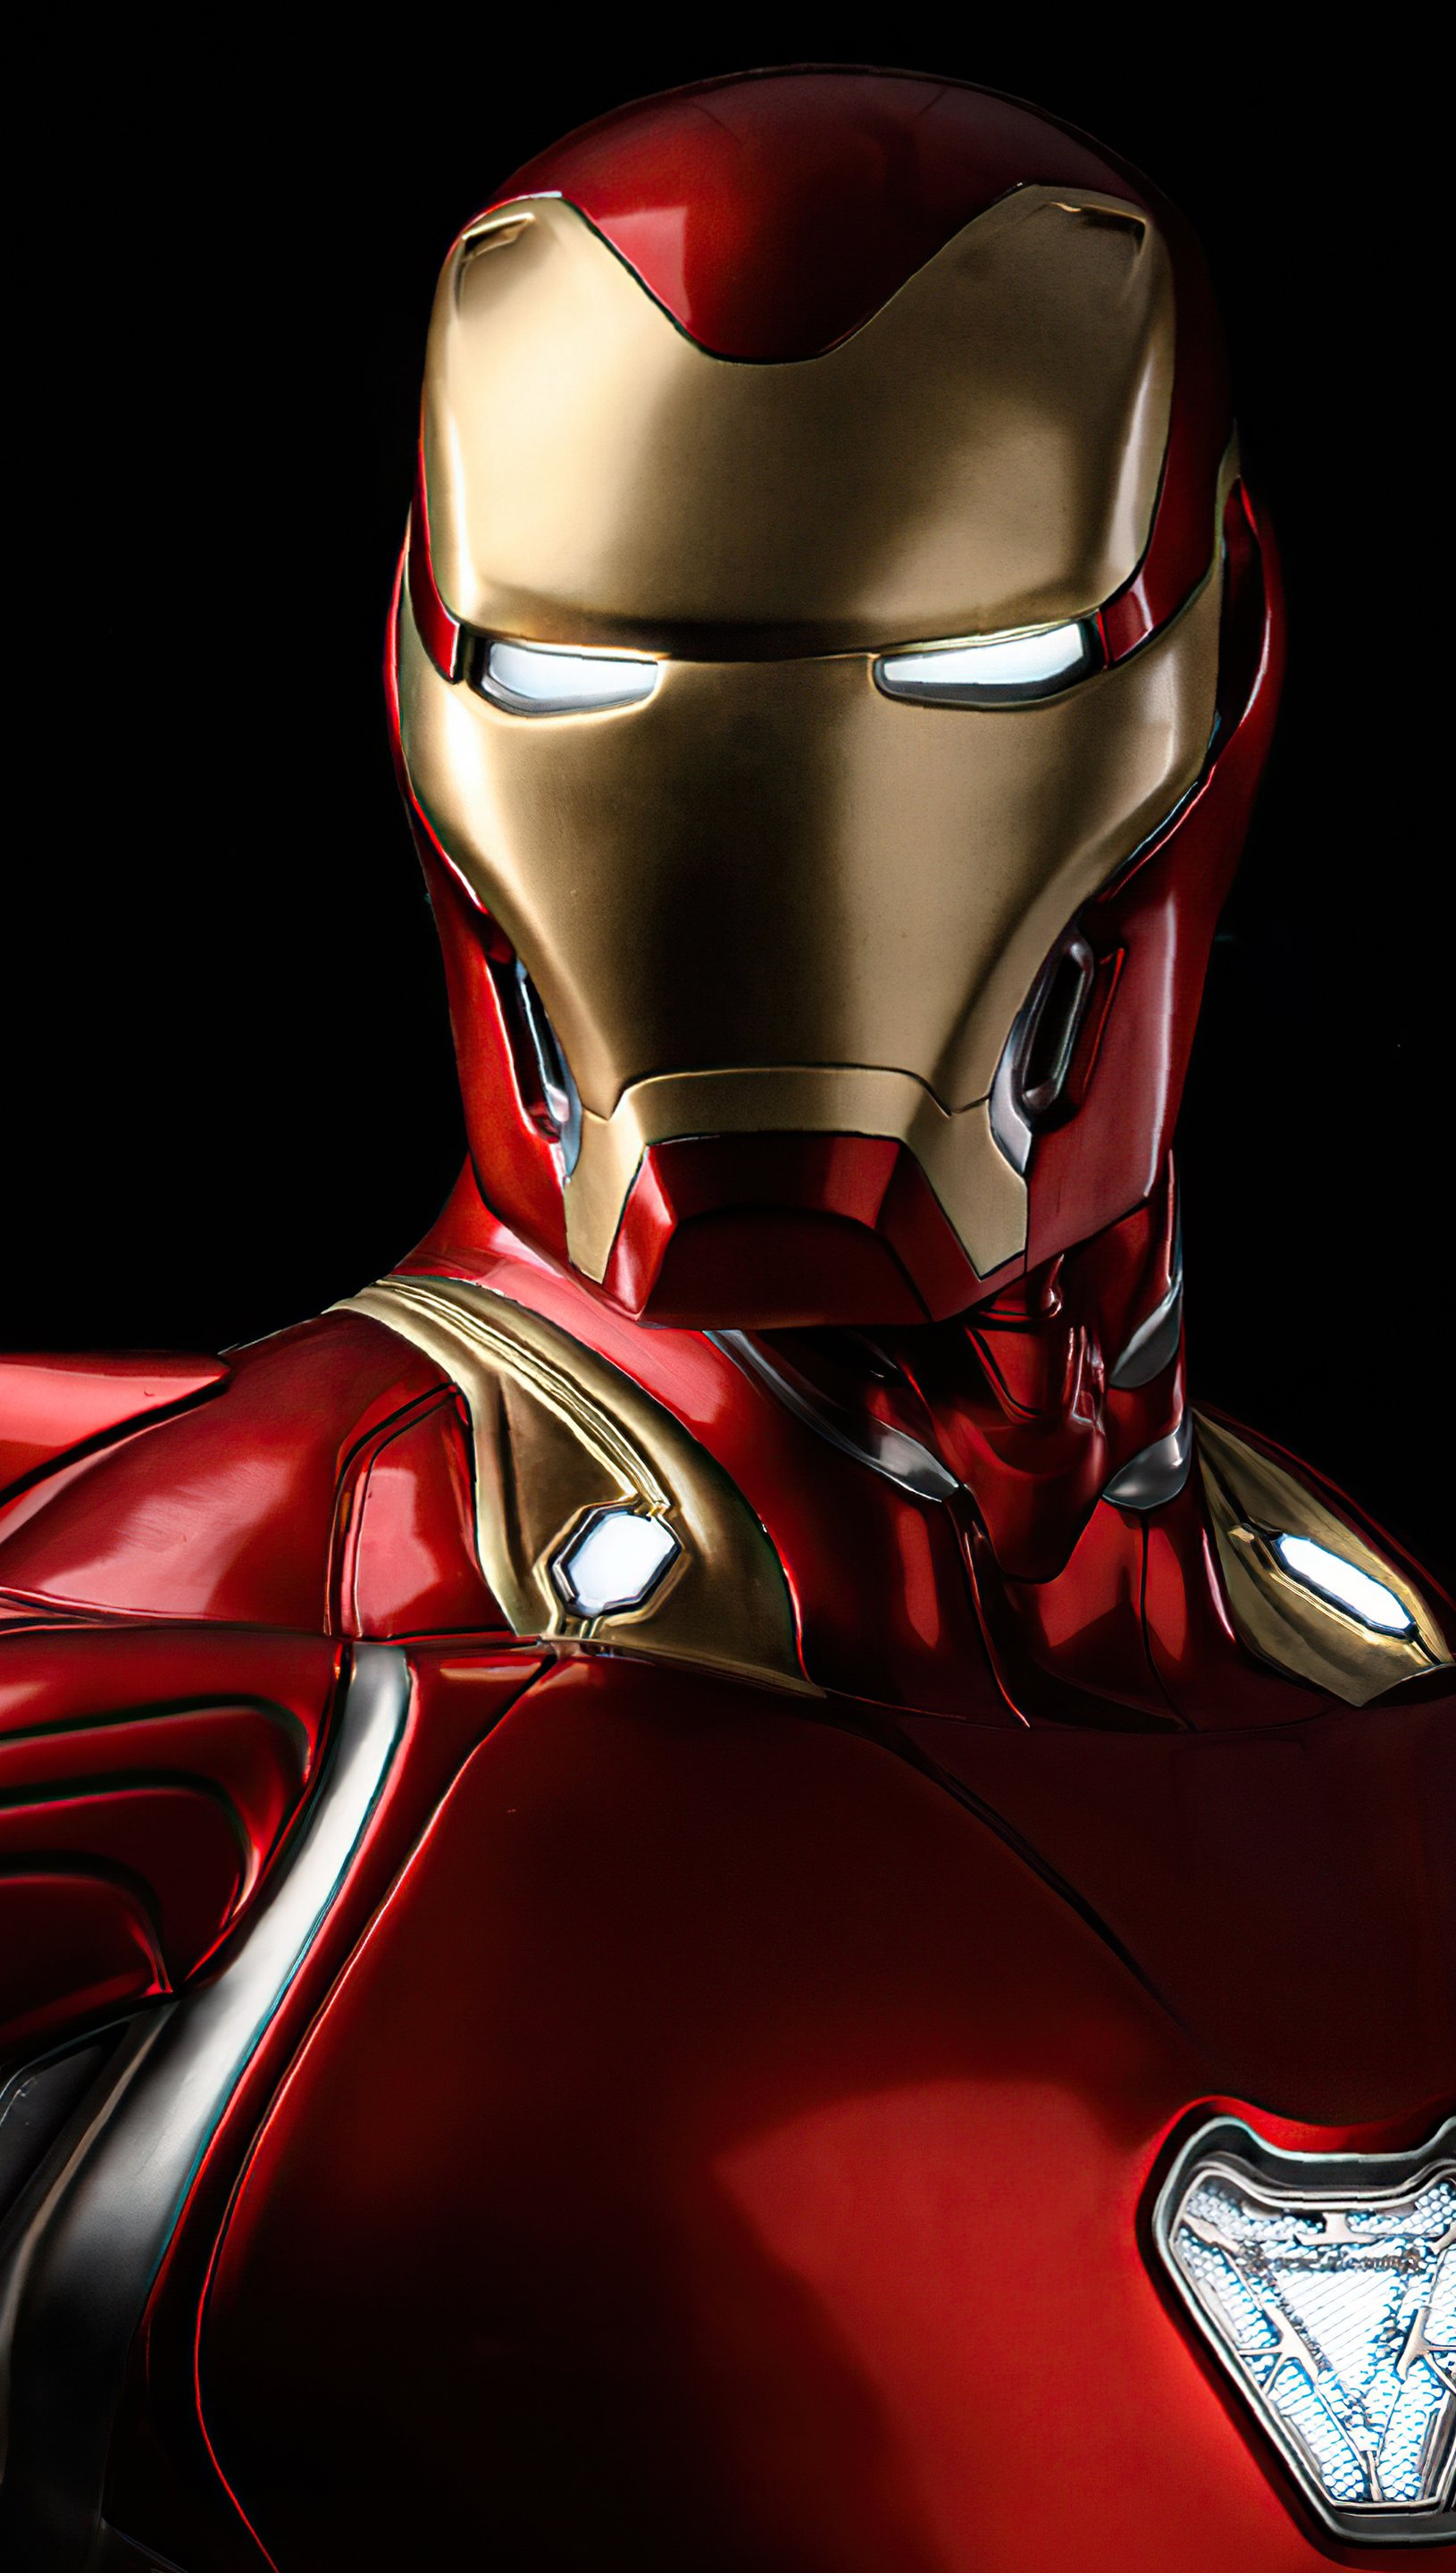 Iron Man Glowing eyes Wallpaper 5k Ultra HD